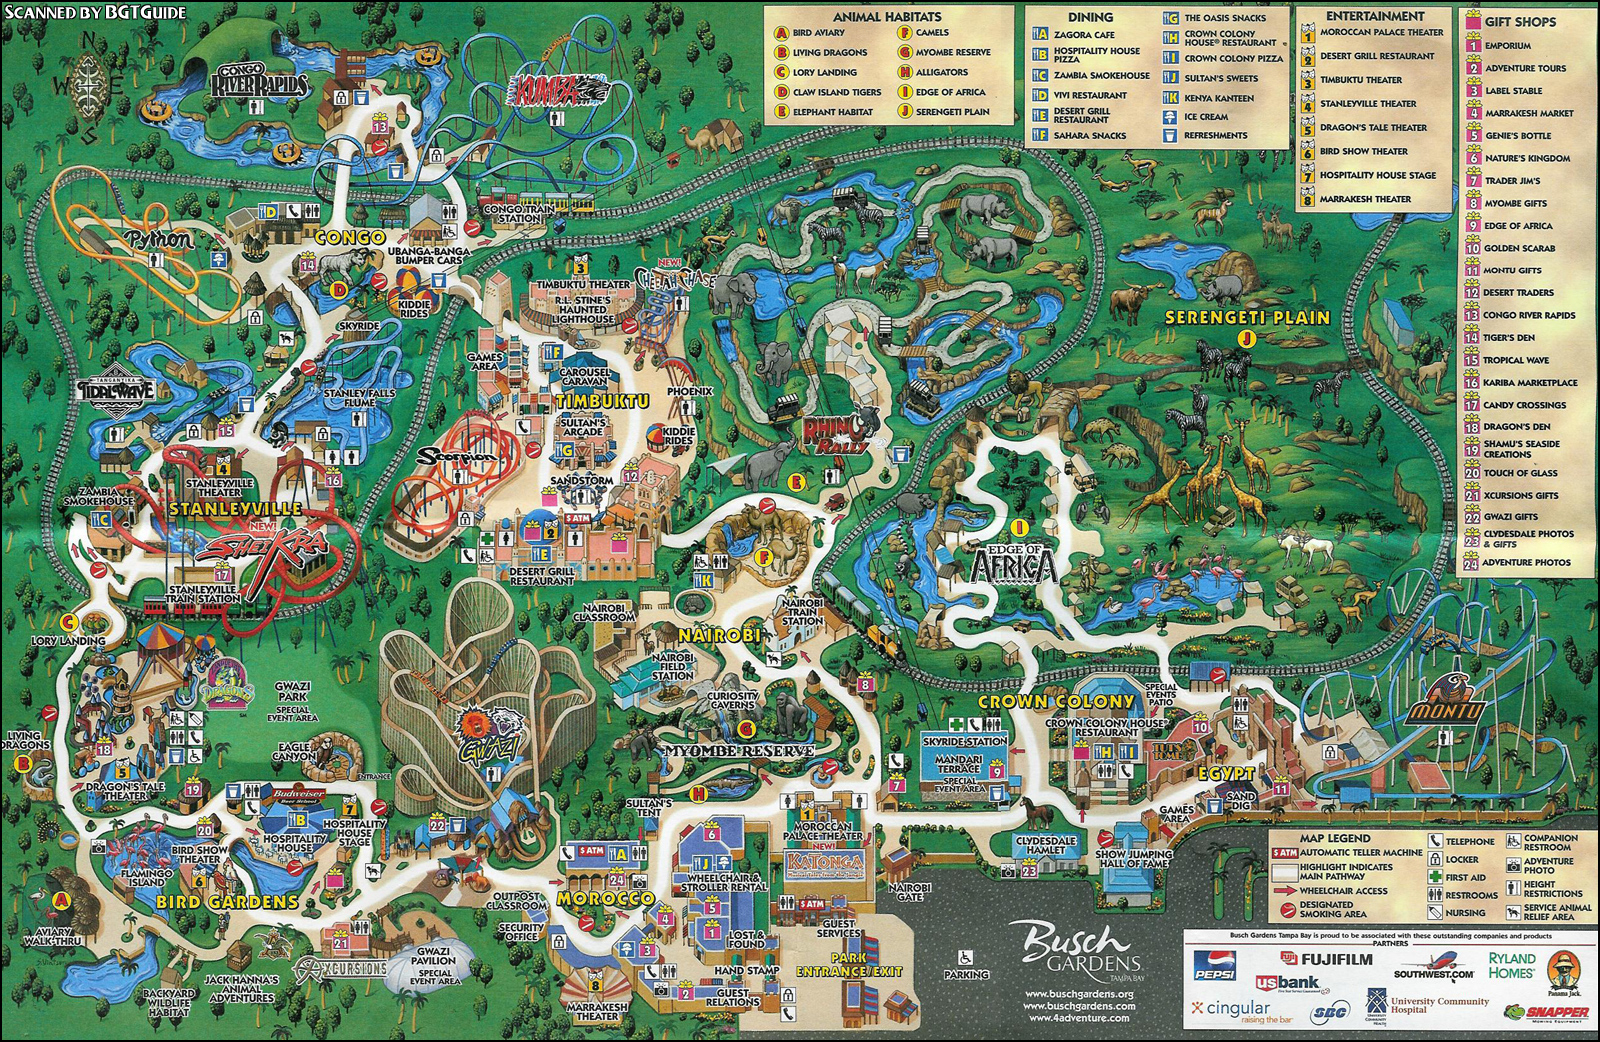 Busch Gardens Tampa - Markus Ansara - Bush Garden Florida Map